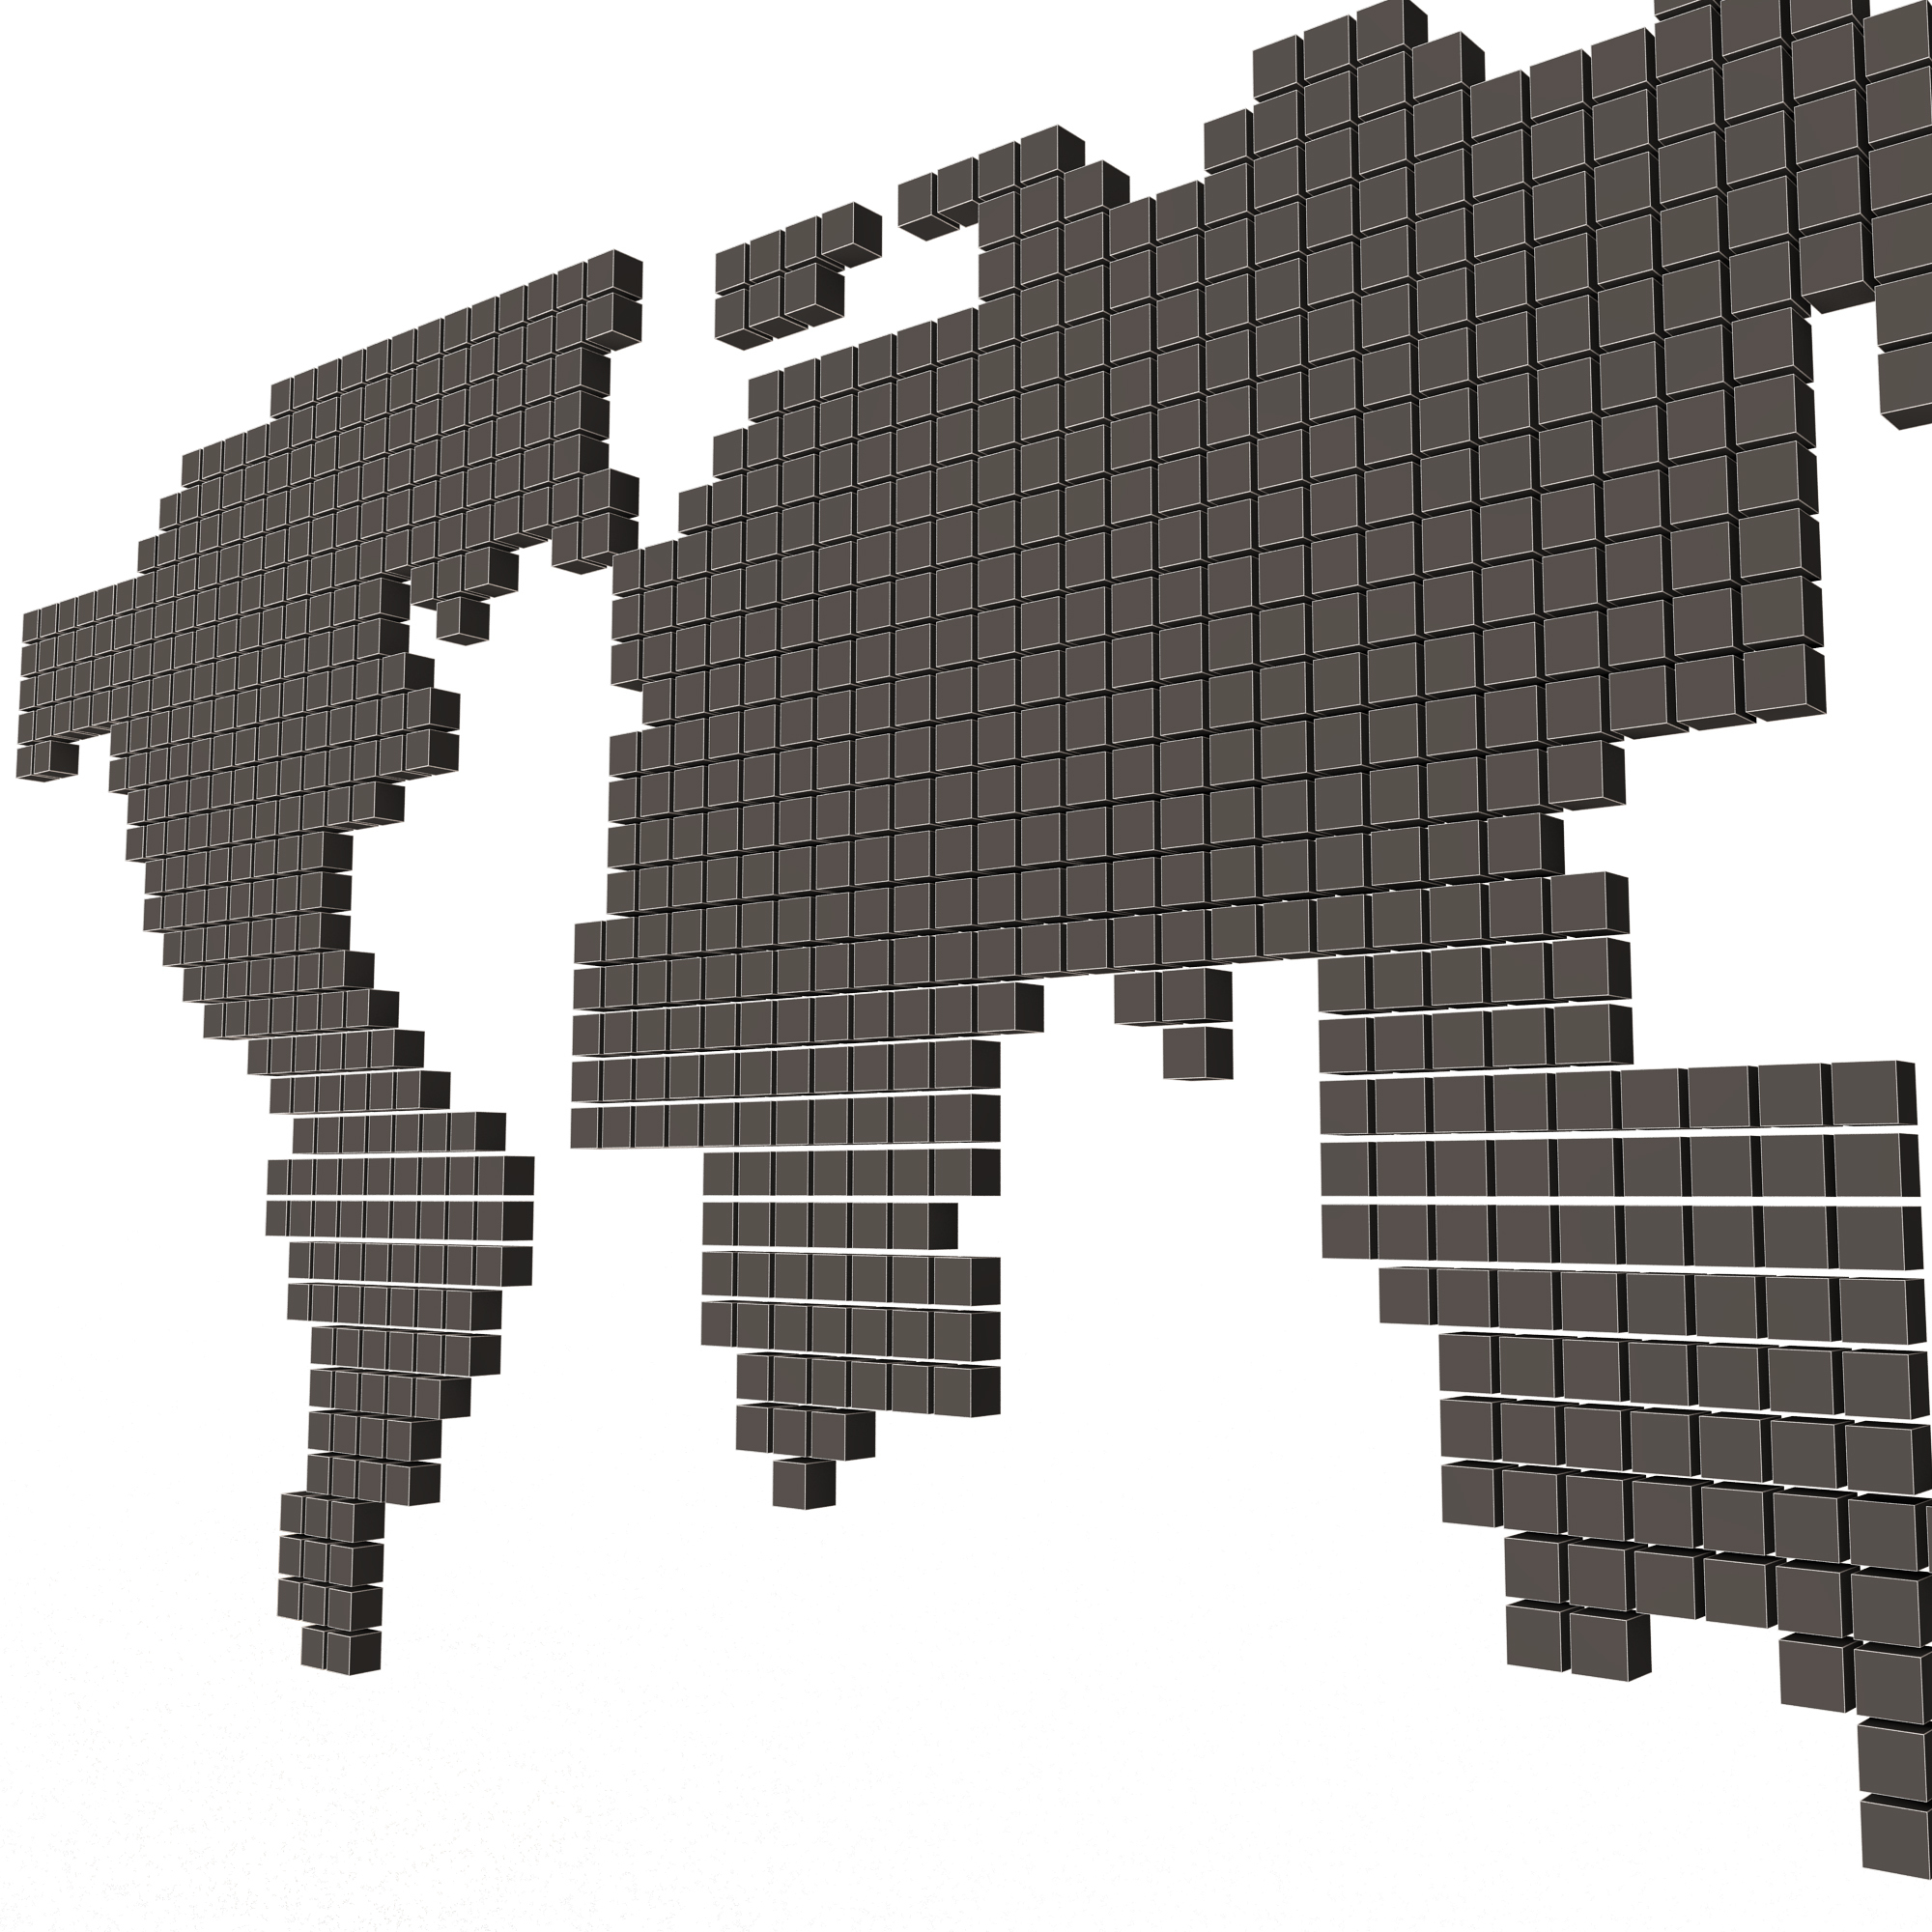 Карта cube. 3д Mapping кубик. UE World Cube Map. RISECUBE карта.